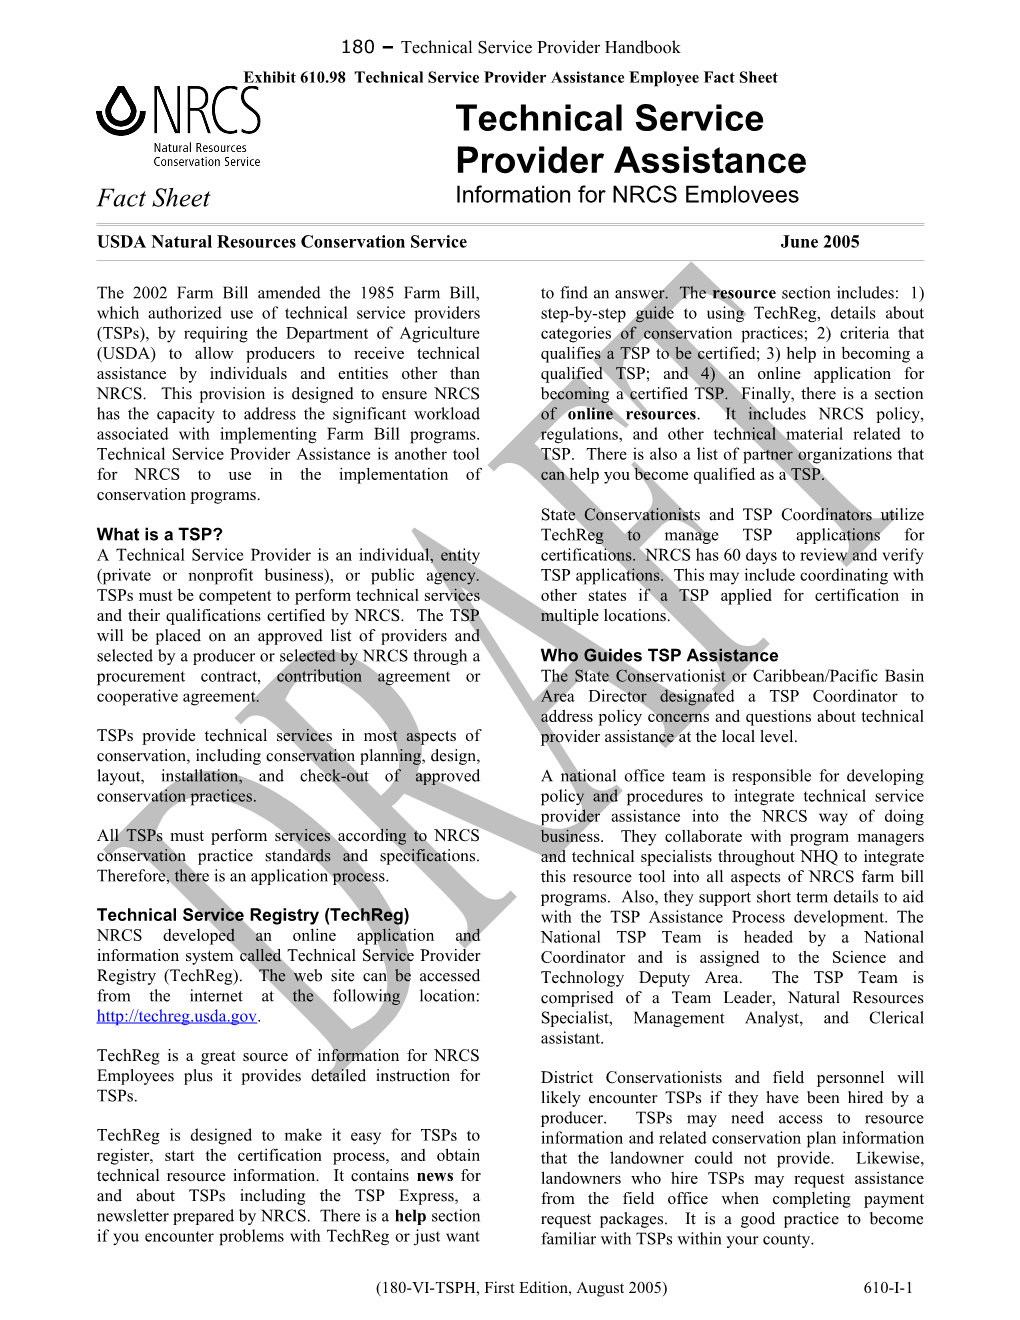 Exhibit 610.98 Technical Service Provider Assistance Employee Fact Sheet